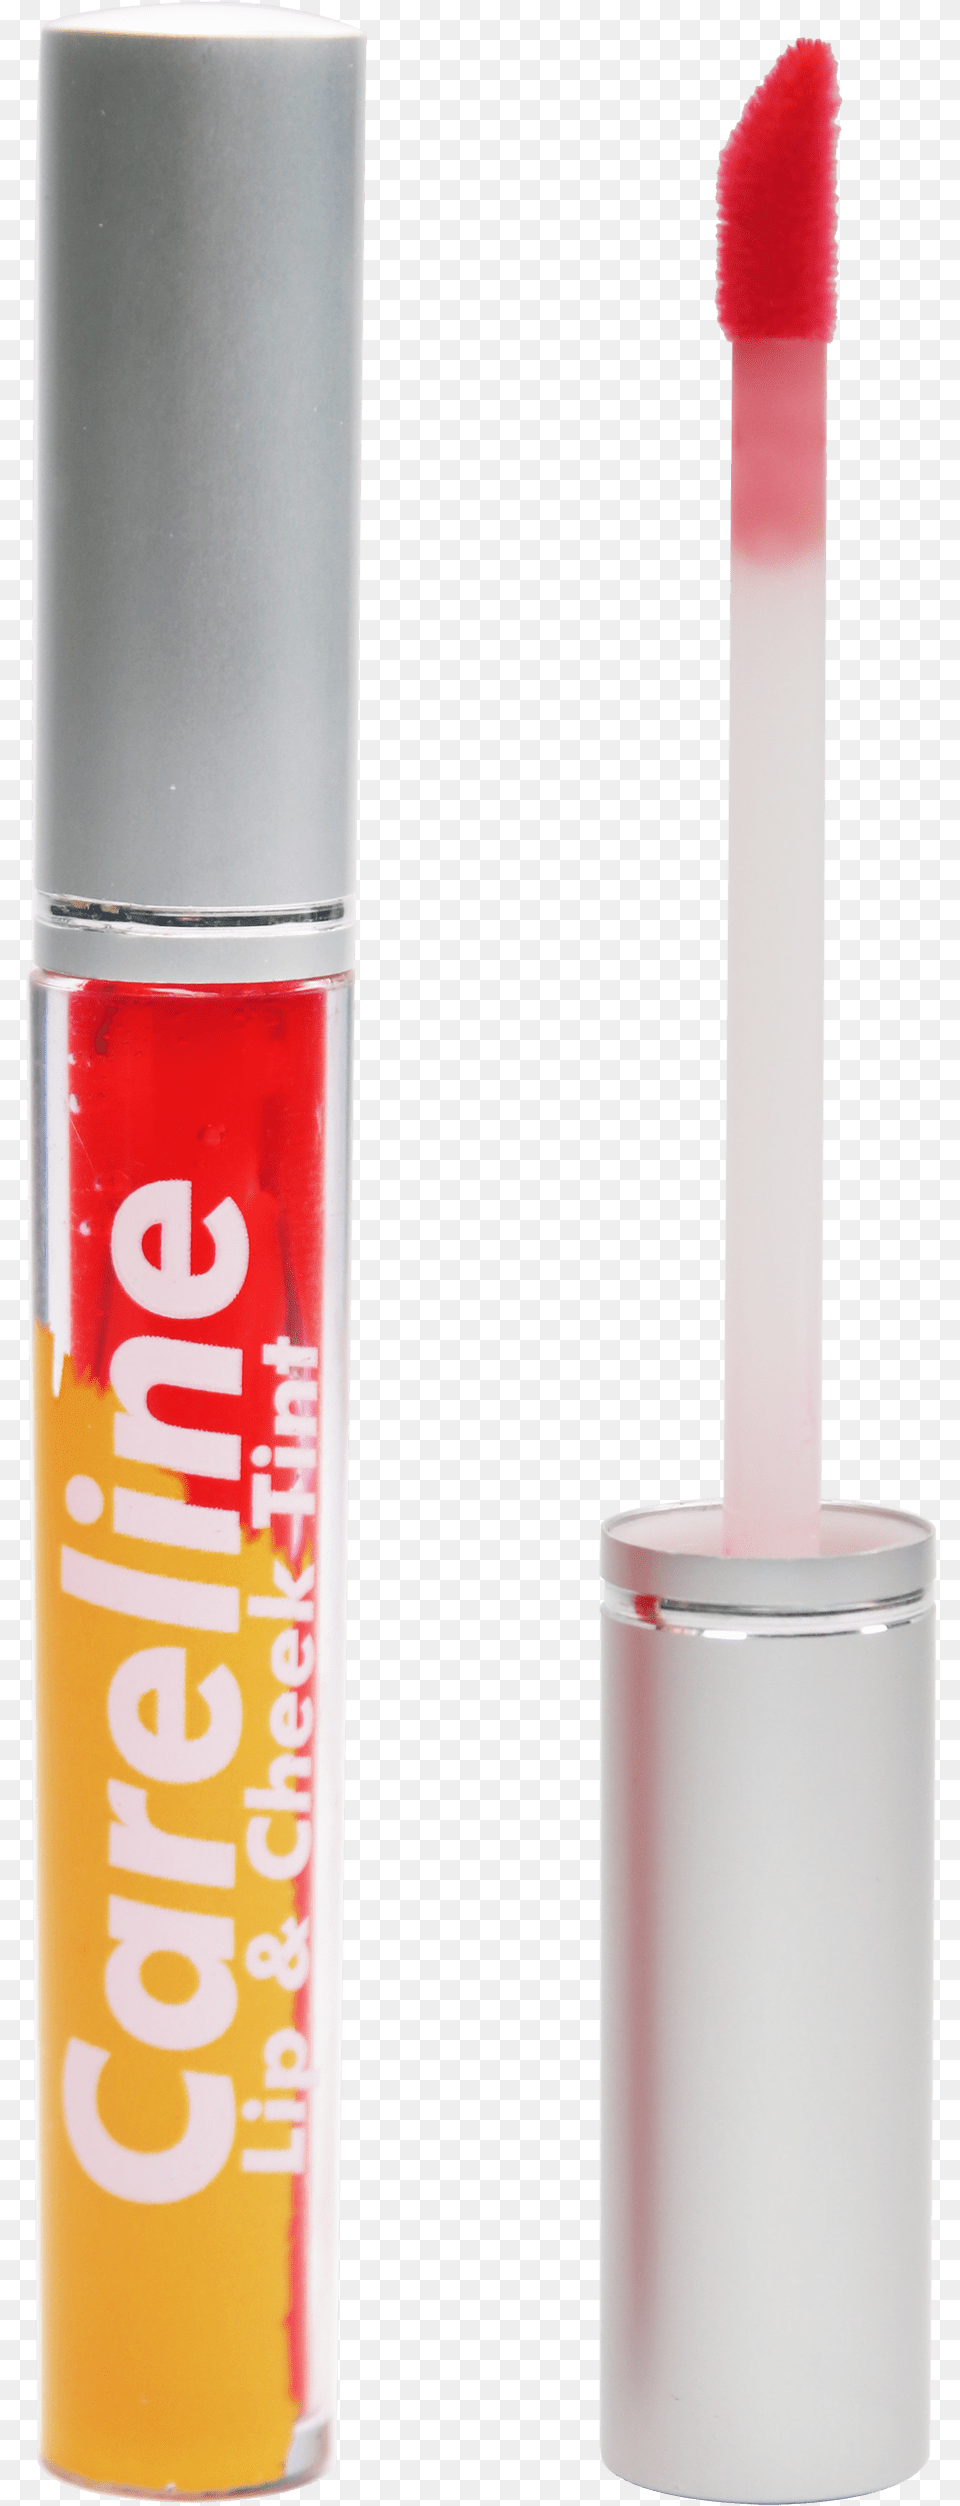 Careline Lip And Cheek Tint, Cosmetics, Lipstick Png